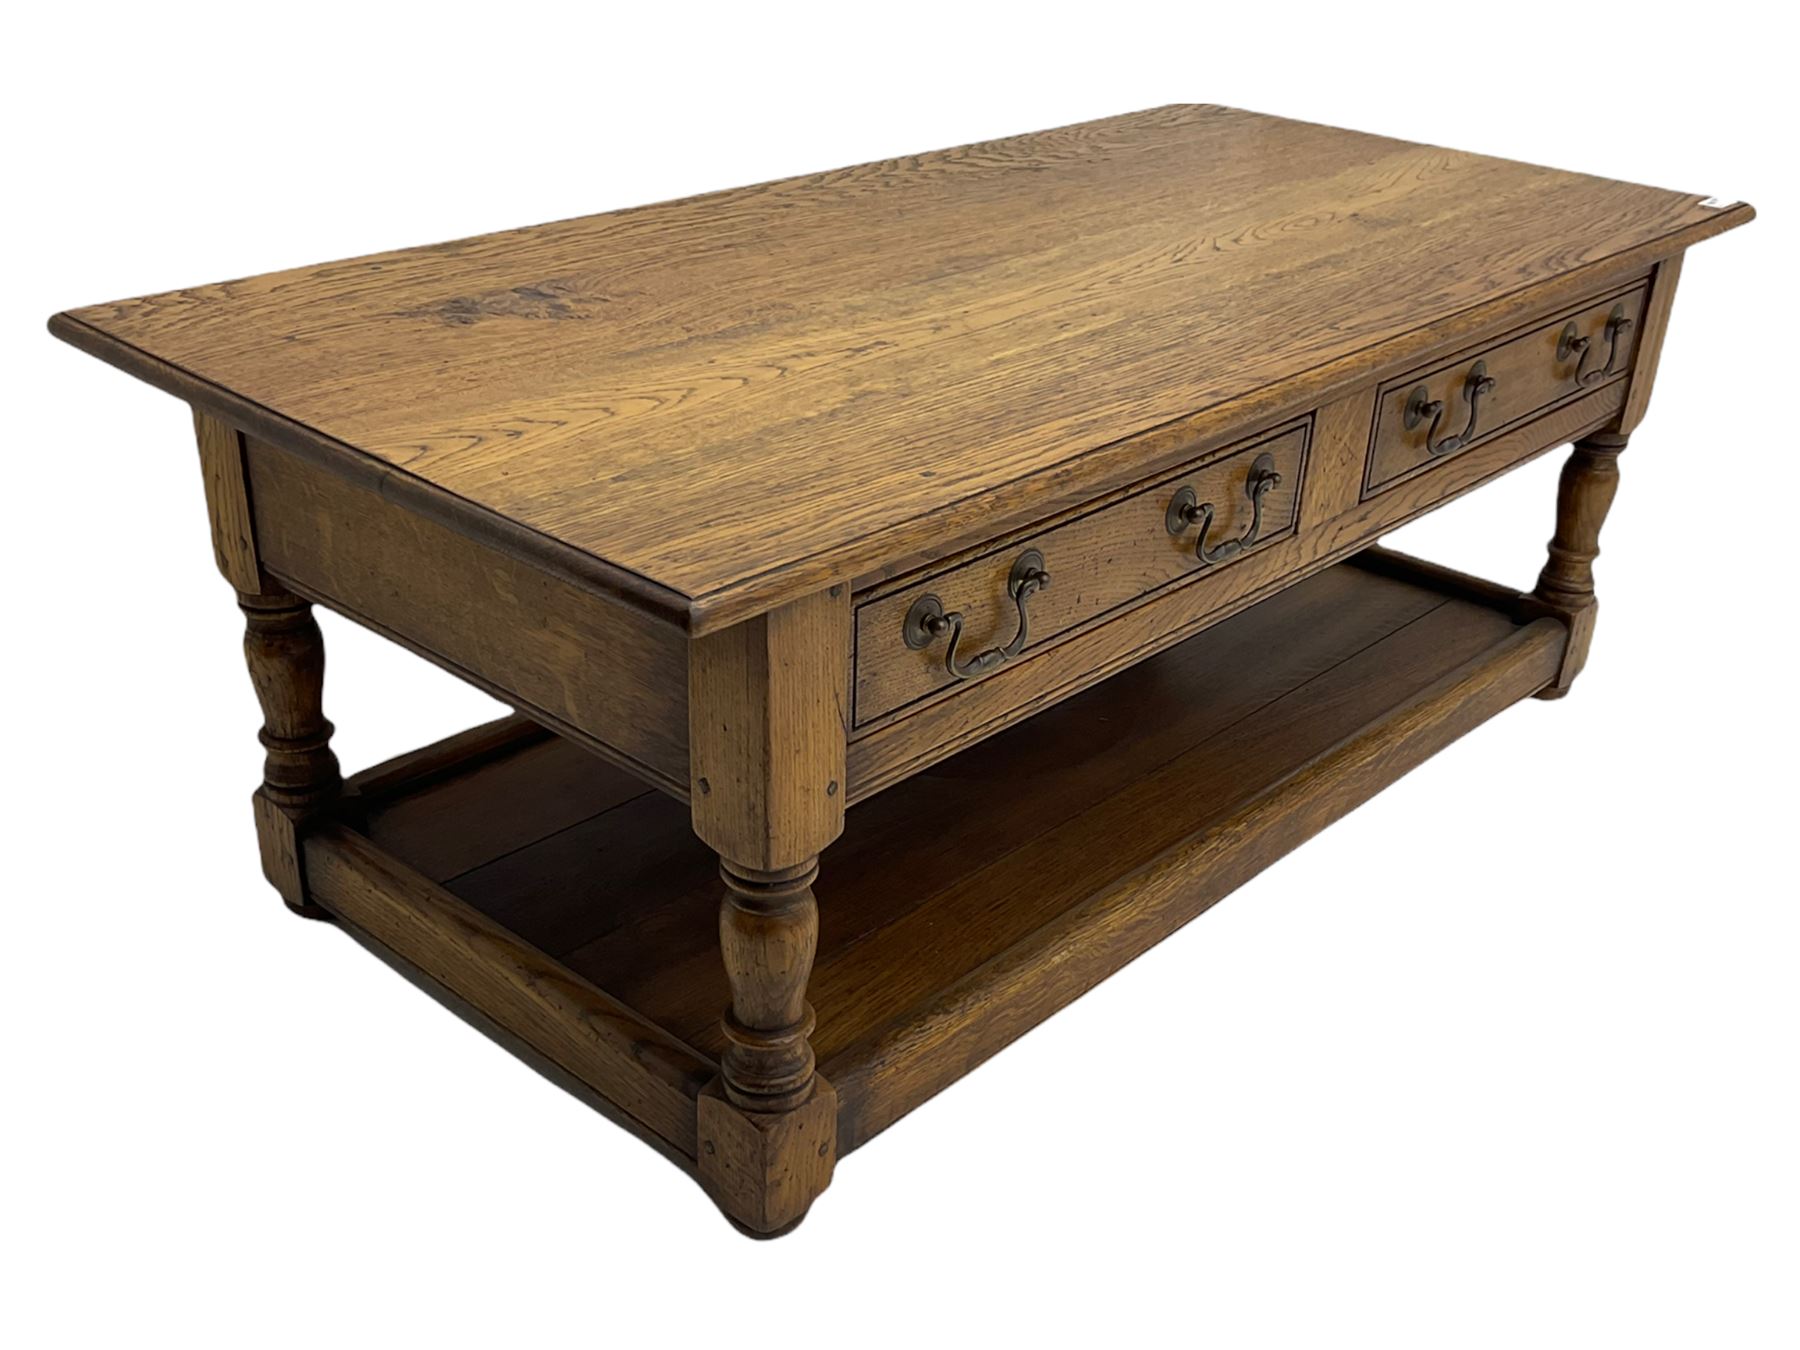 Rectangular oak coffee table - Image 2 of 6